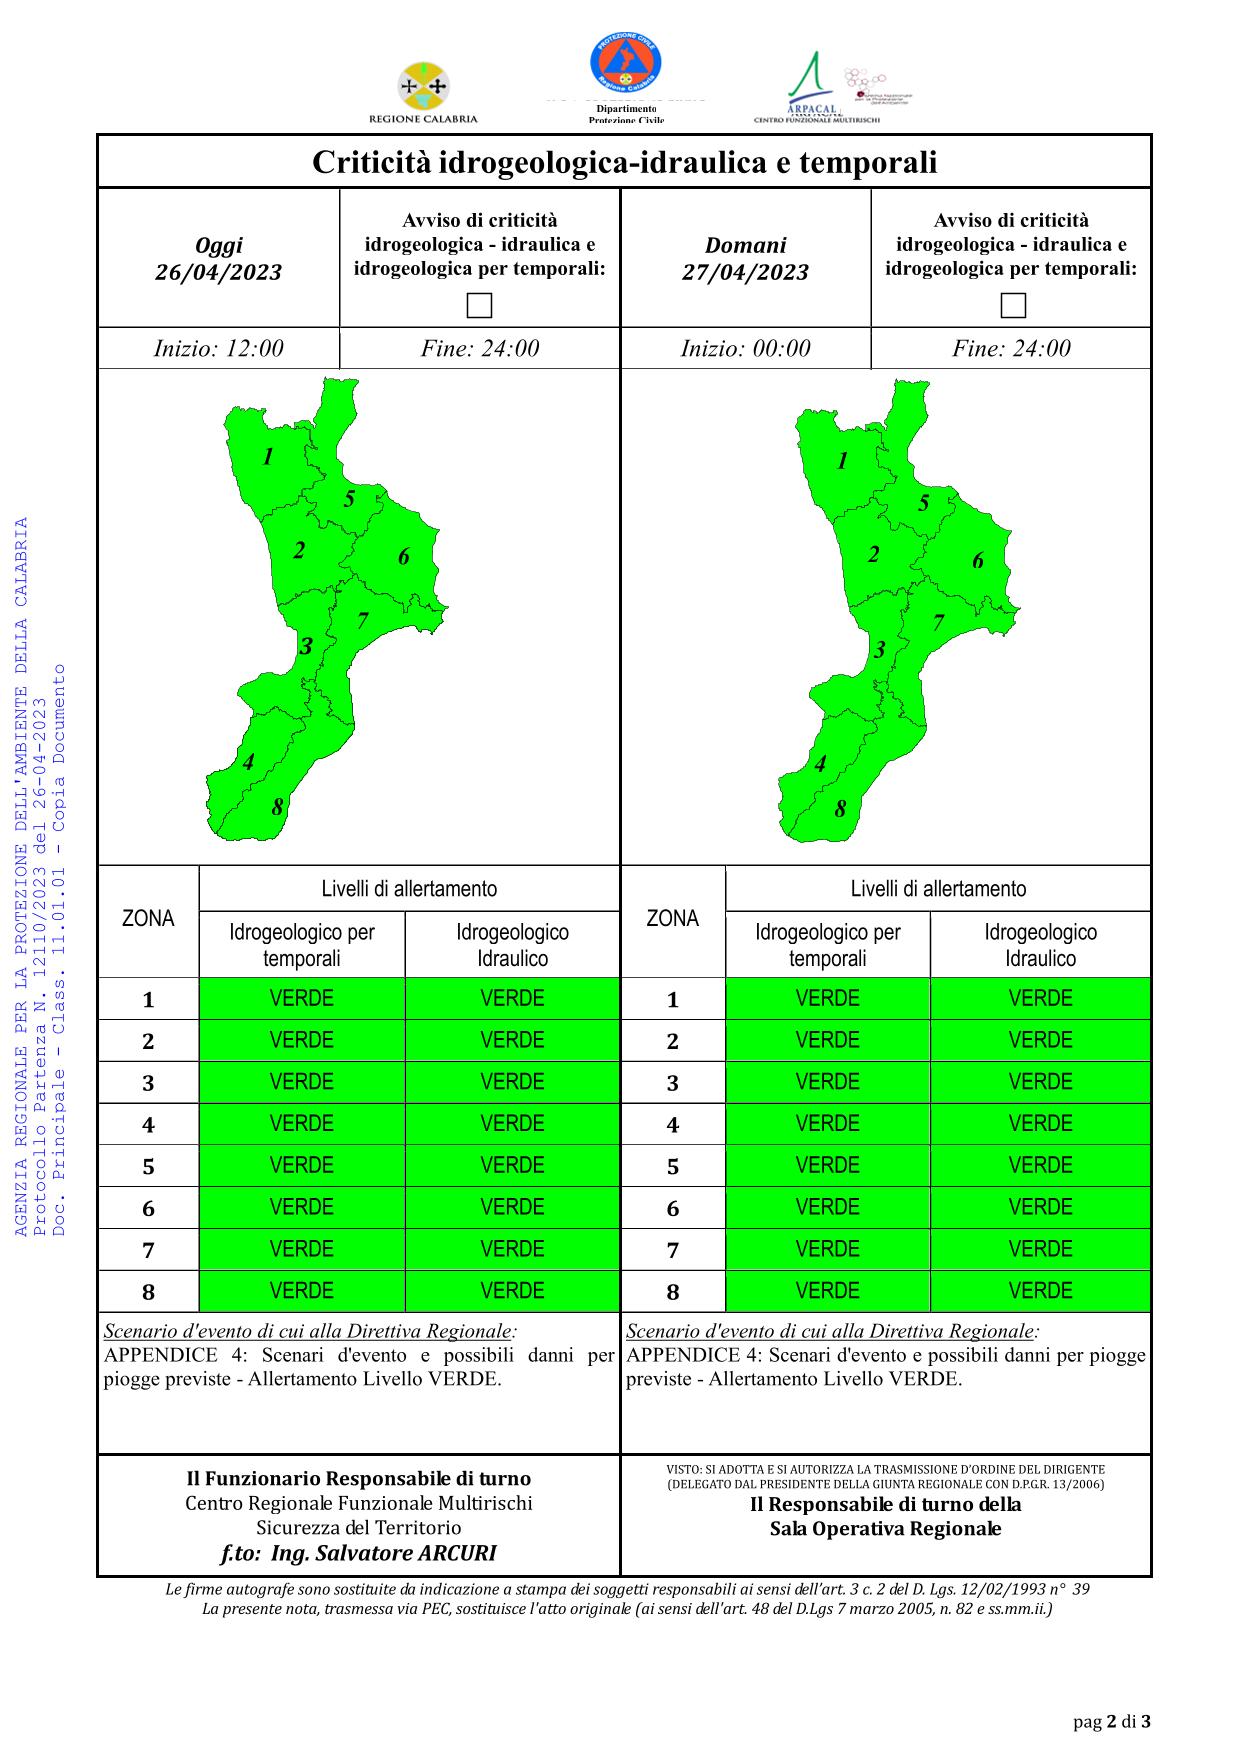 Criticità idrogeologica-idraulica e temporali in Calabria 26-04-2023